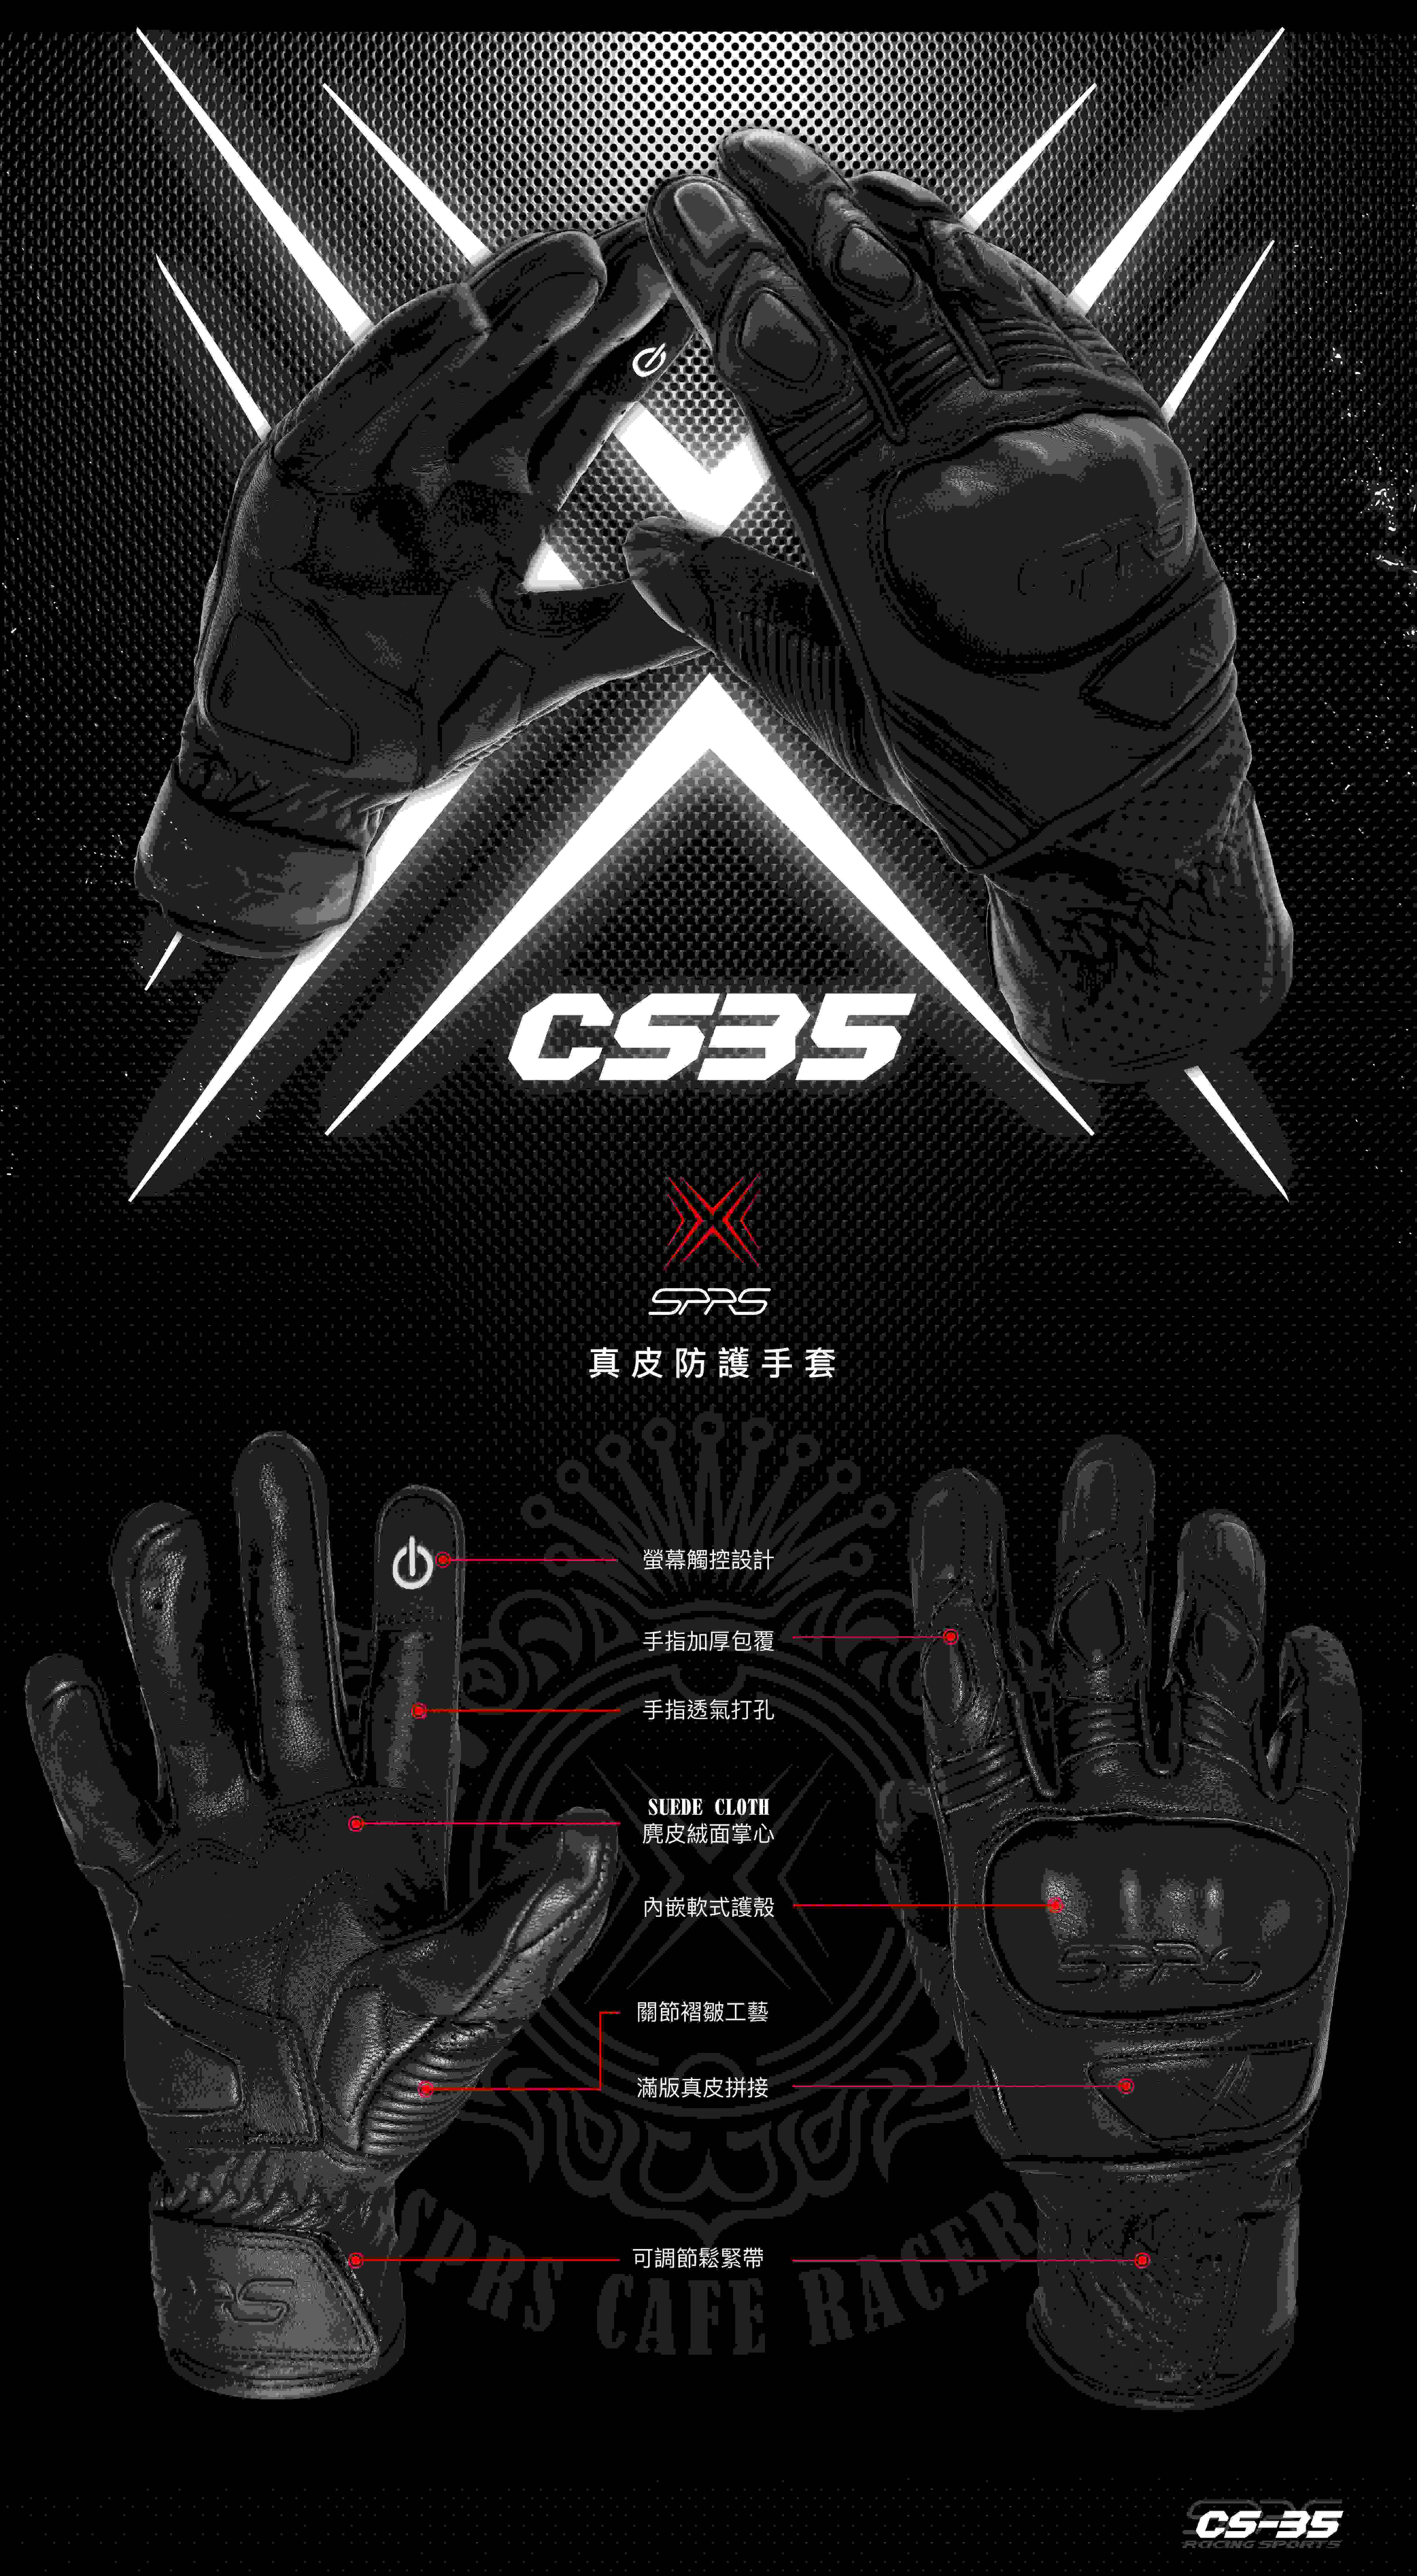 【SPRS(Speed-R Sports)】CS35 真皮防護手套 -  Webike摩托百貨